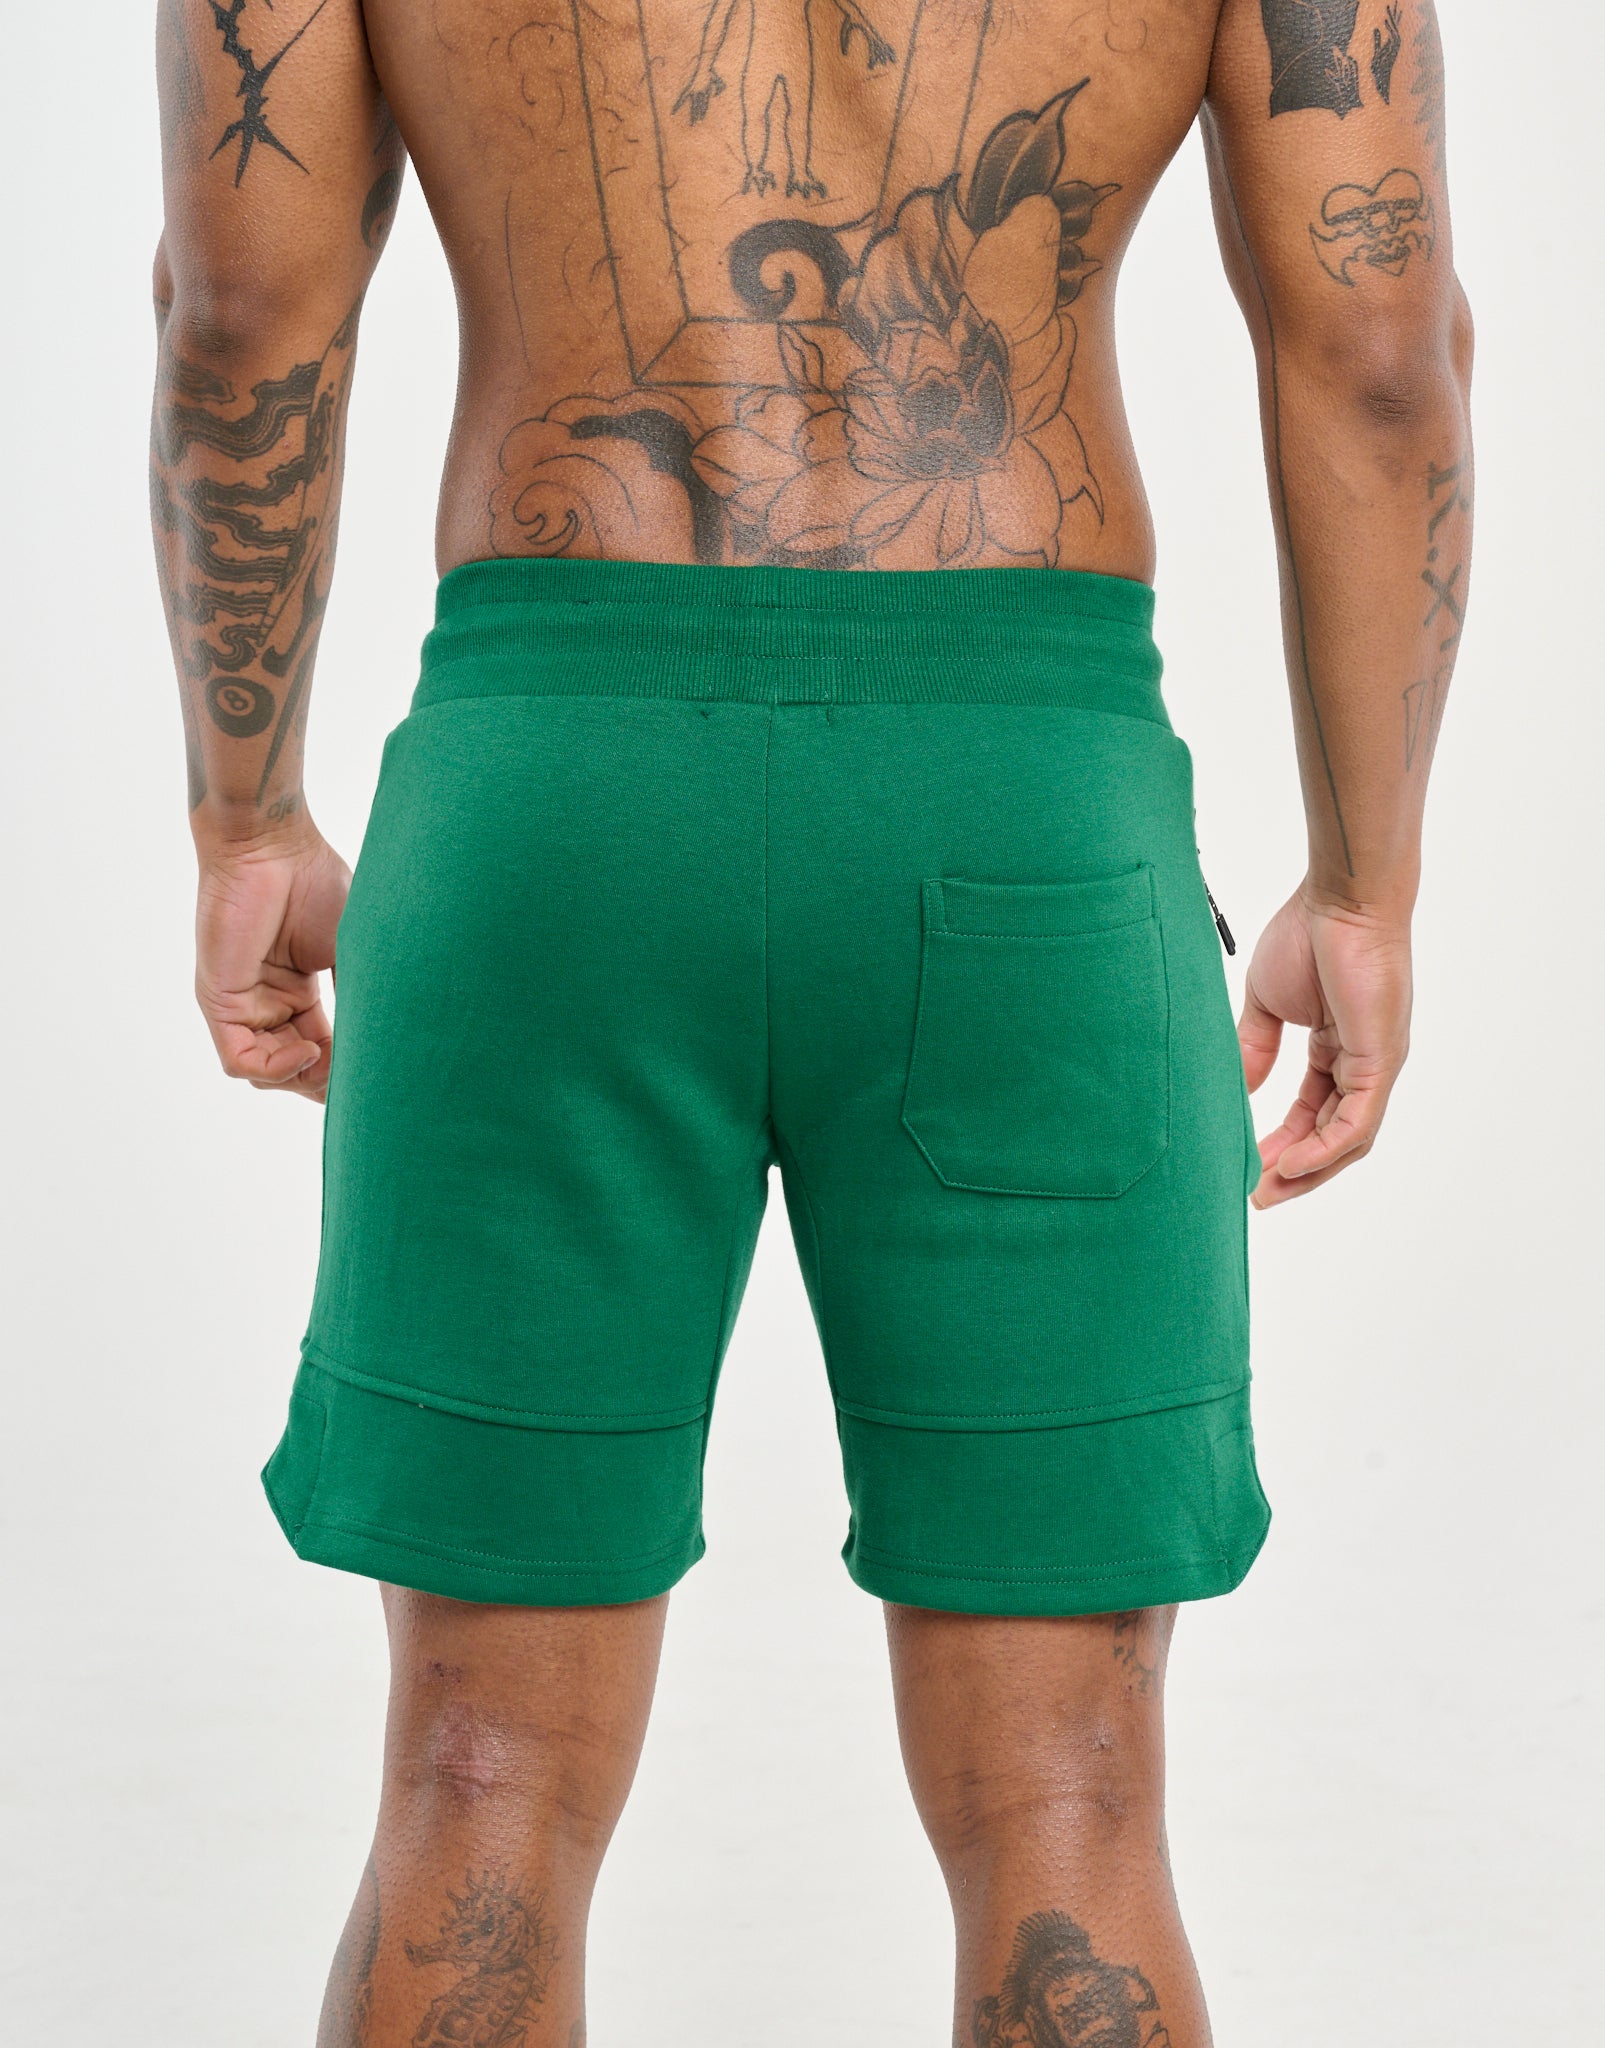 Echt Force Knit Shorts - Forest Green